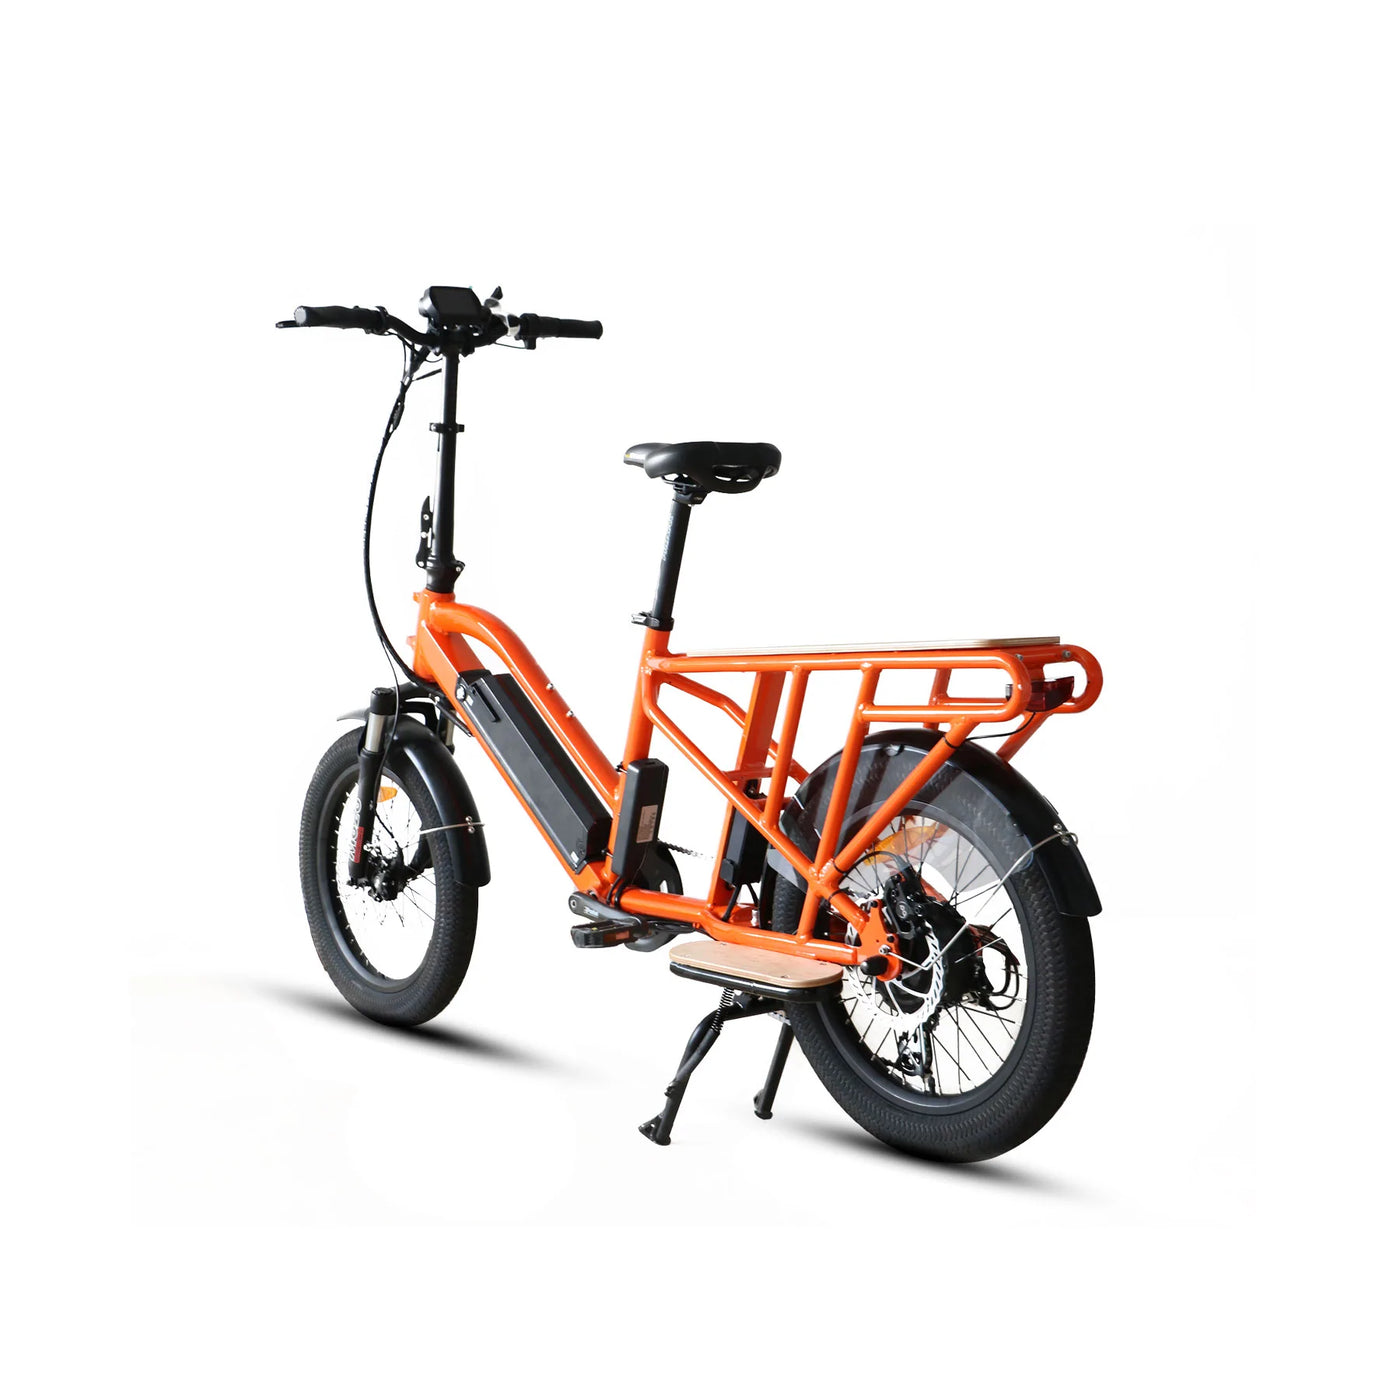 Eunorau G30 Cargo Electric Bicycle - Rider Cycles 